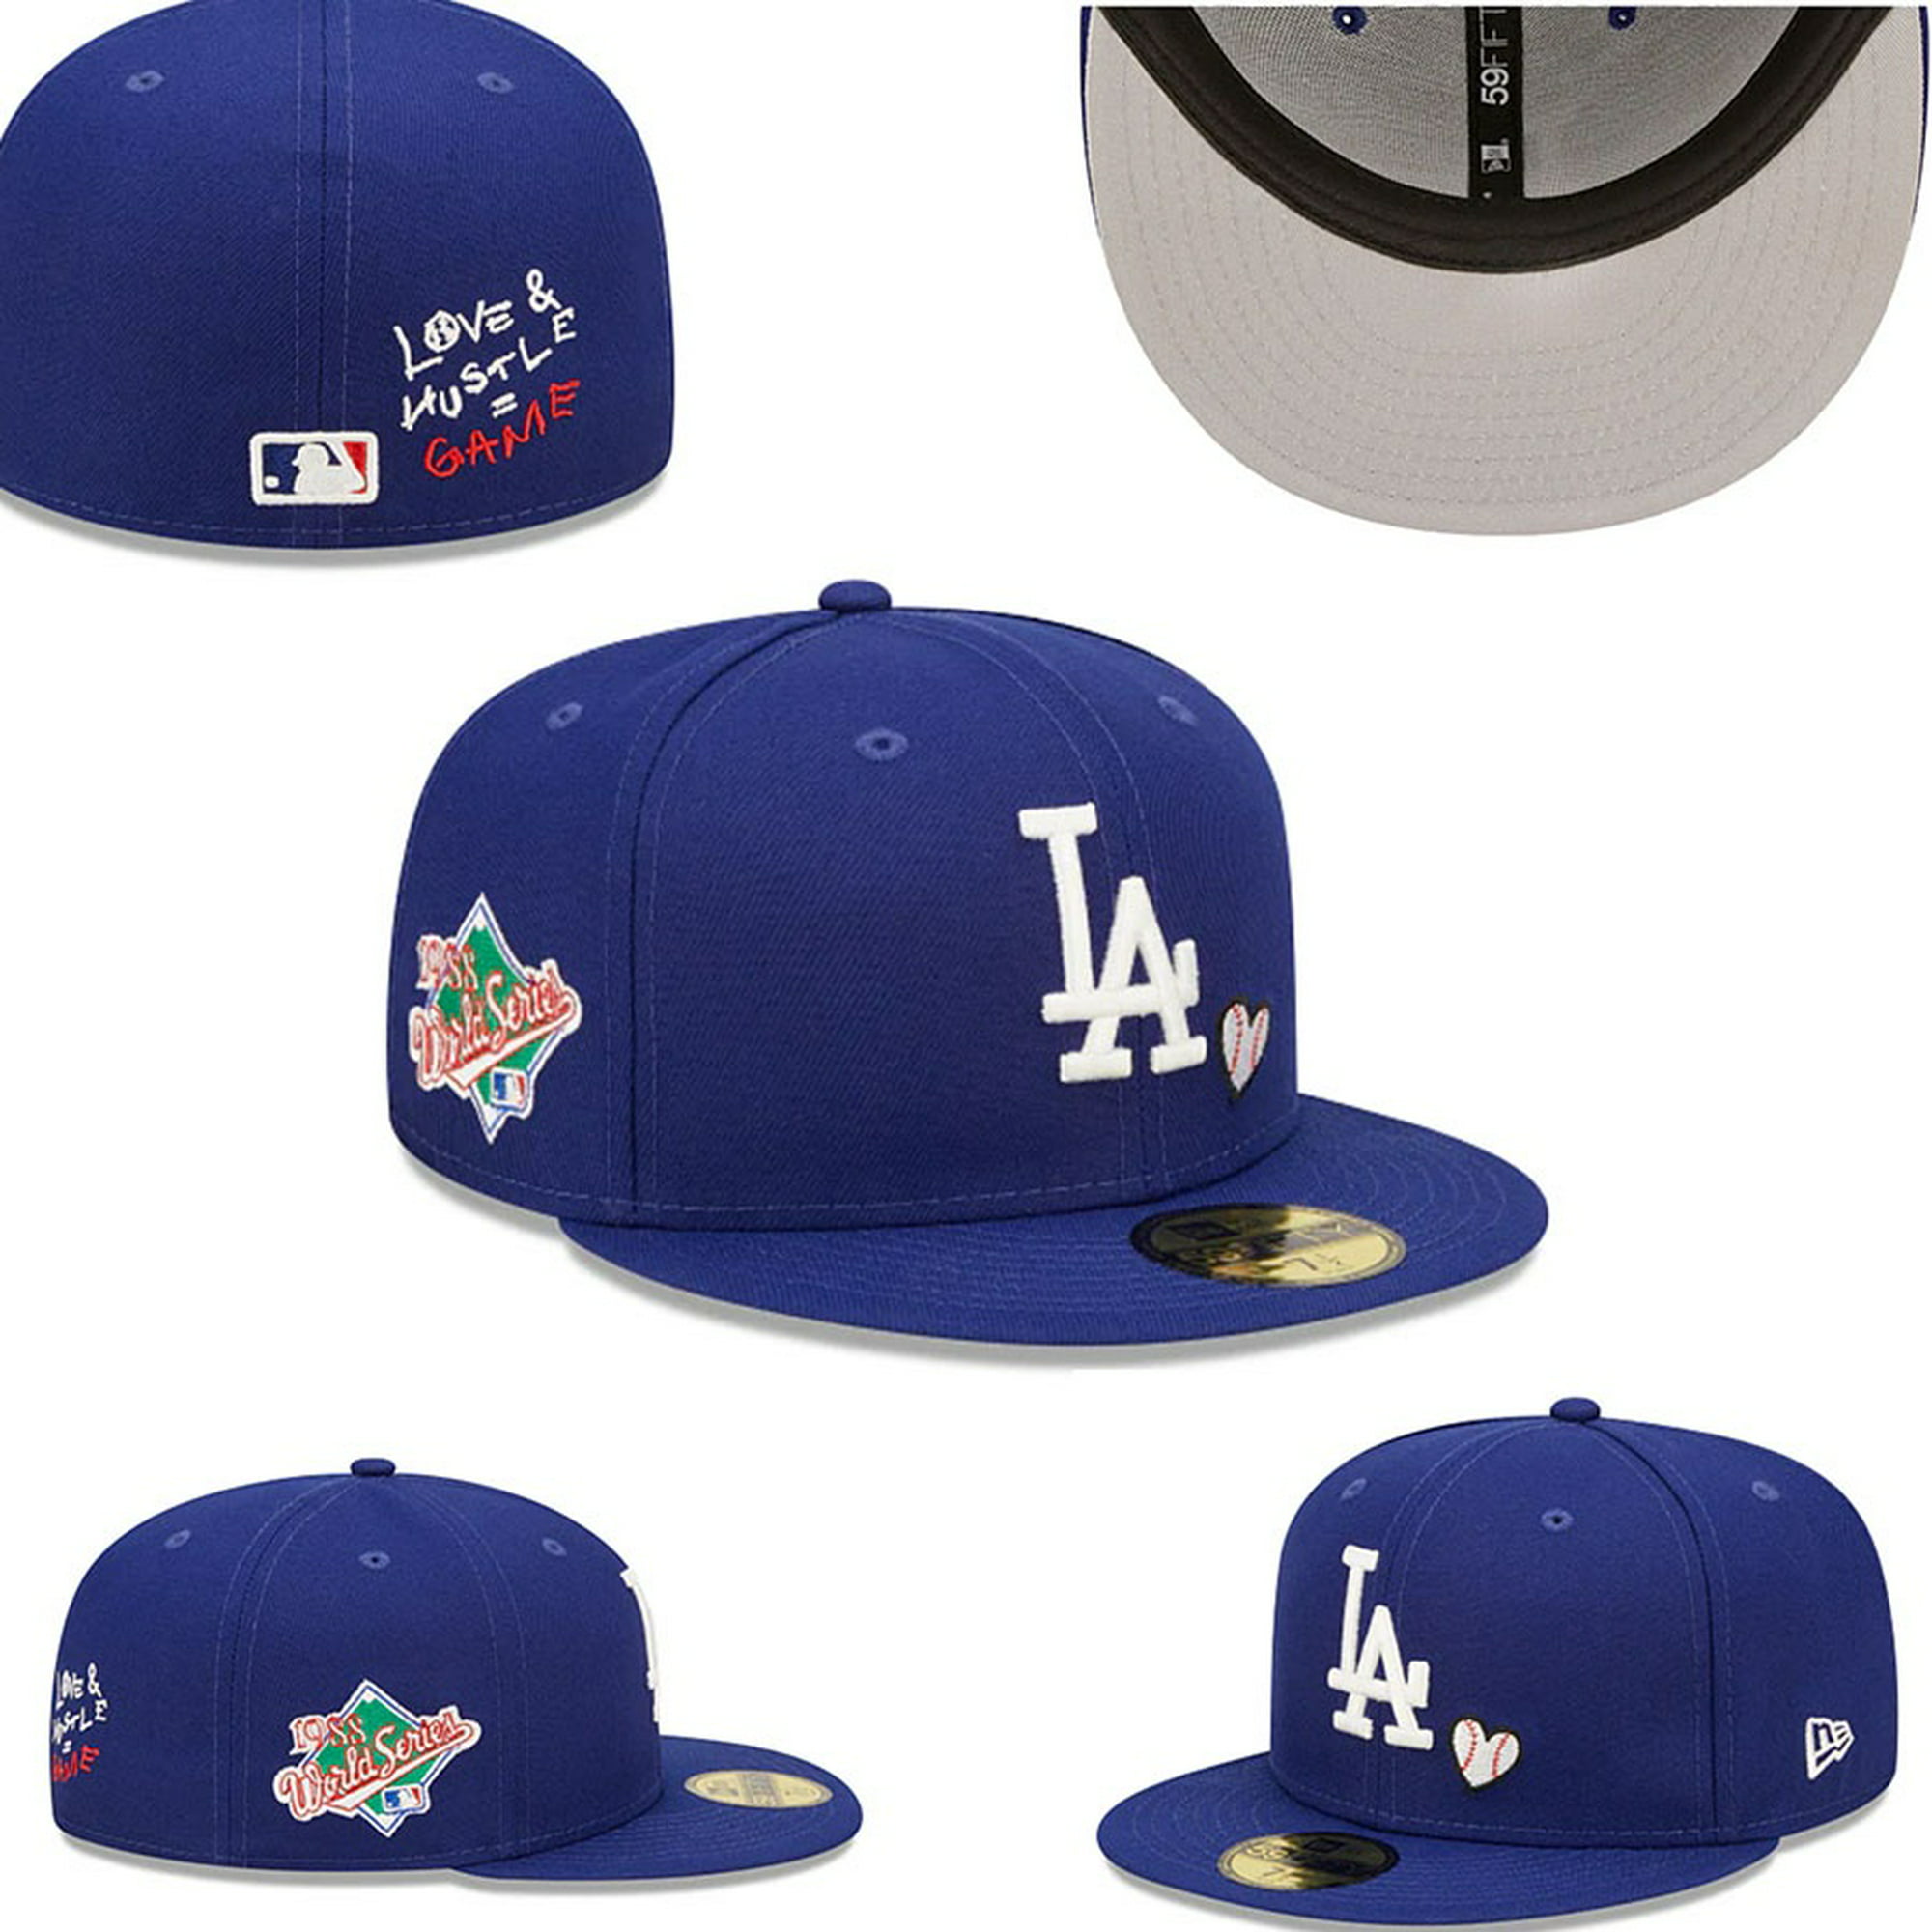 Los Angeles Dodgers Gorra Hombres Mujeres De Béisbol Hiphop Sombreros ...